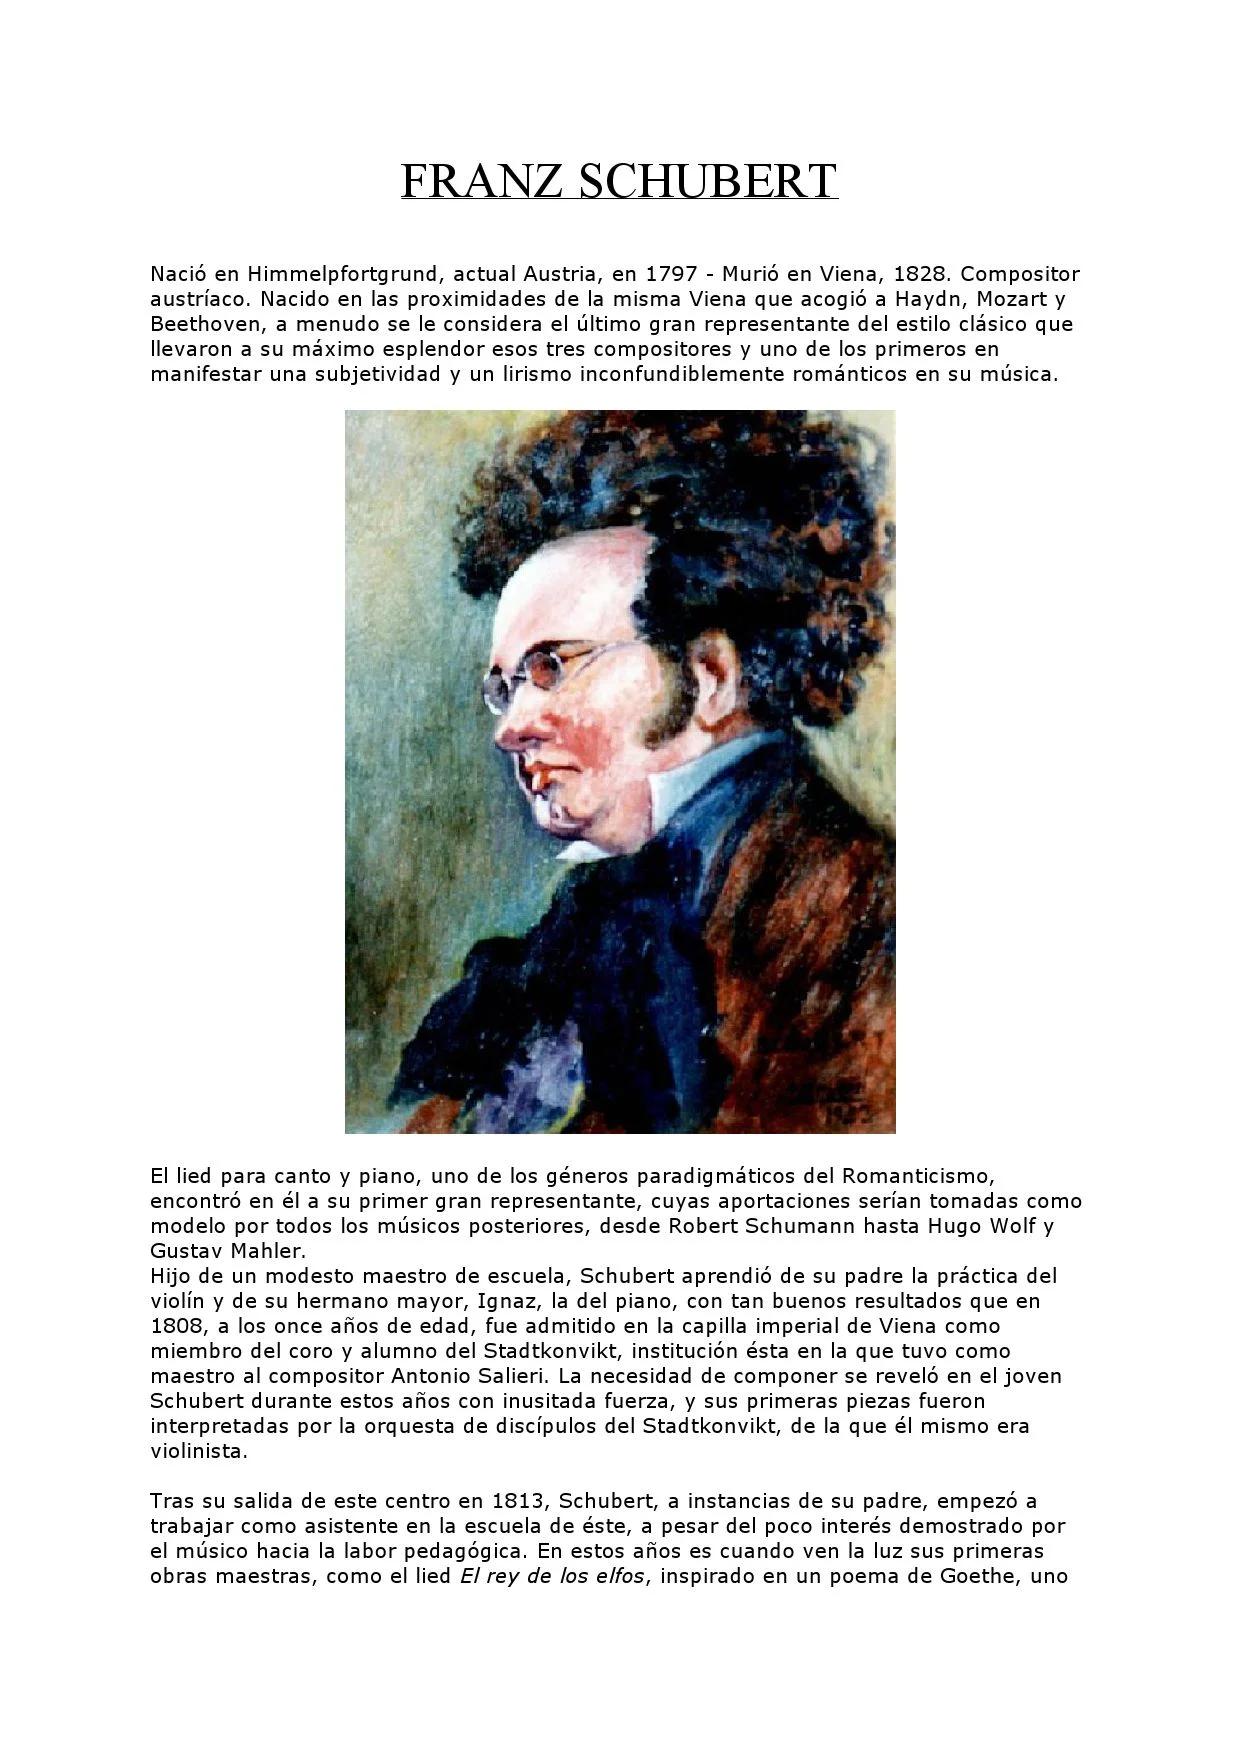 biografia resumida de franz schubert - Cómo era Franz Schubert